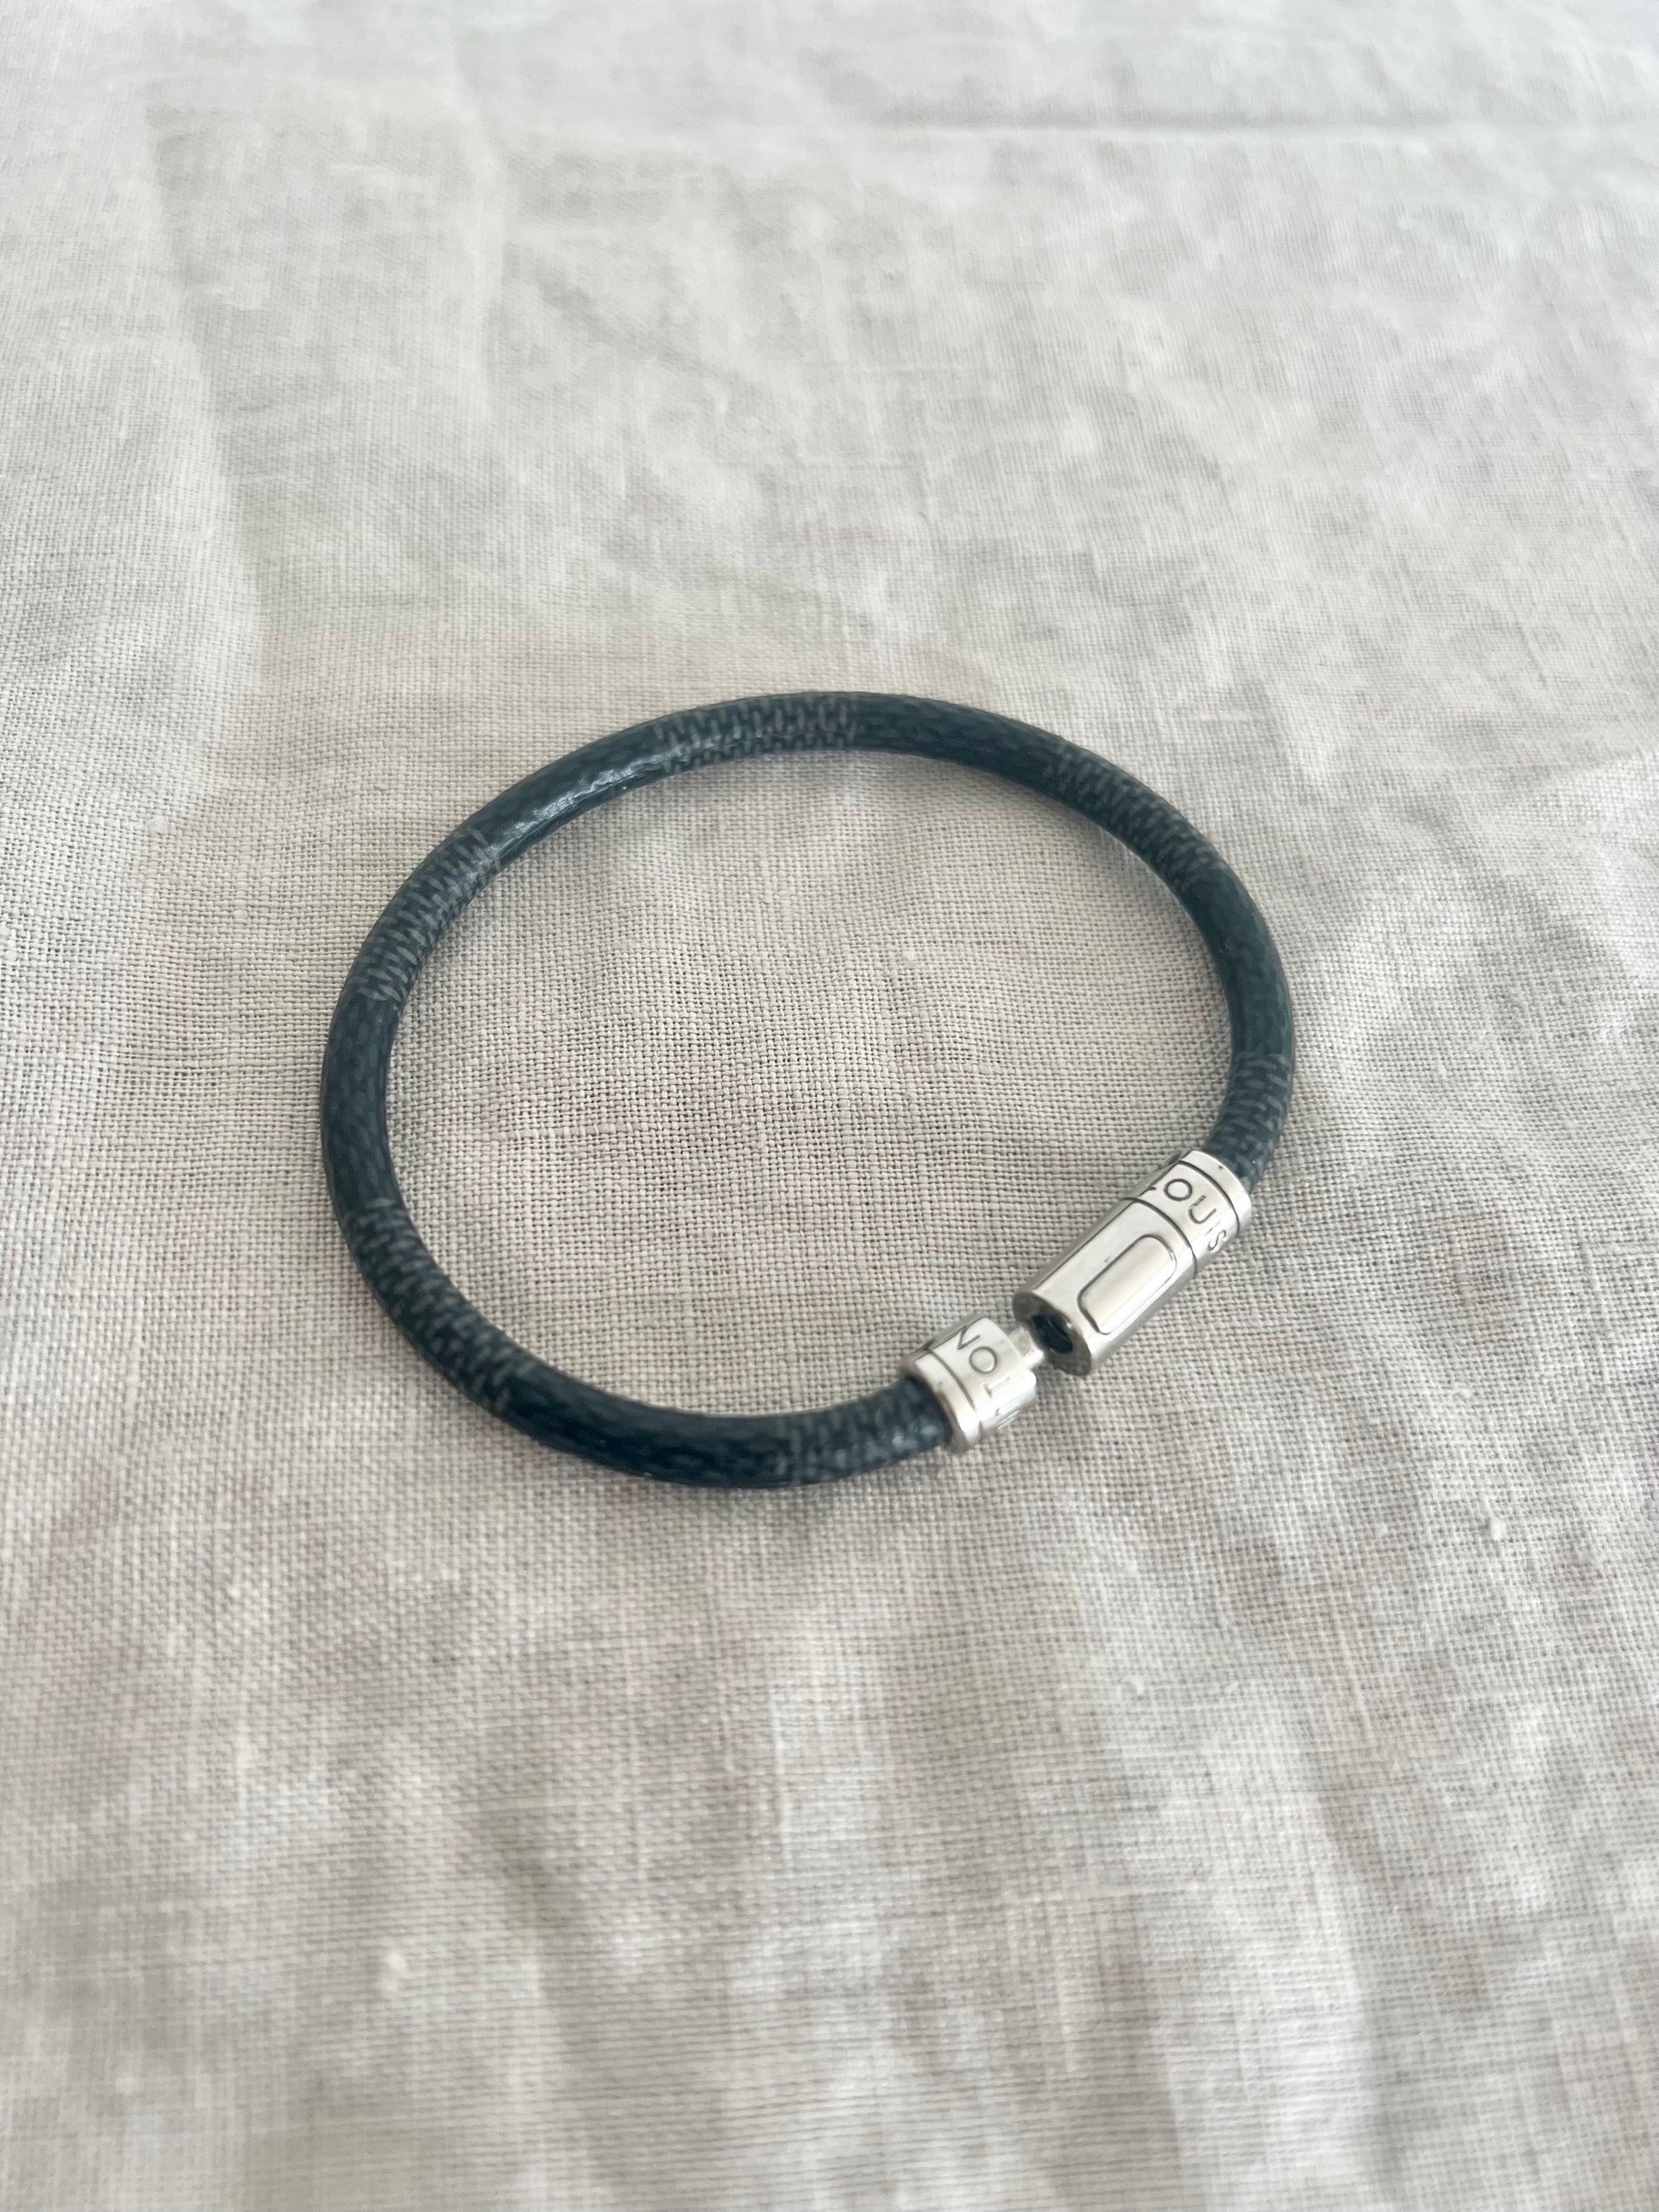 Keep it bracelet Louis Vuitton Black in Other - 34398796